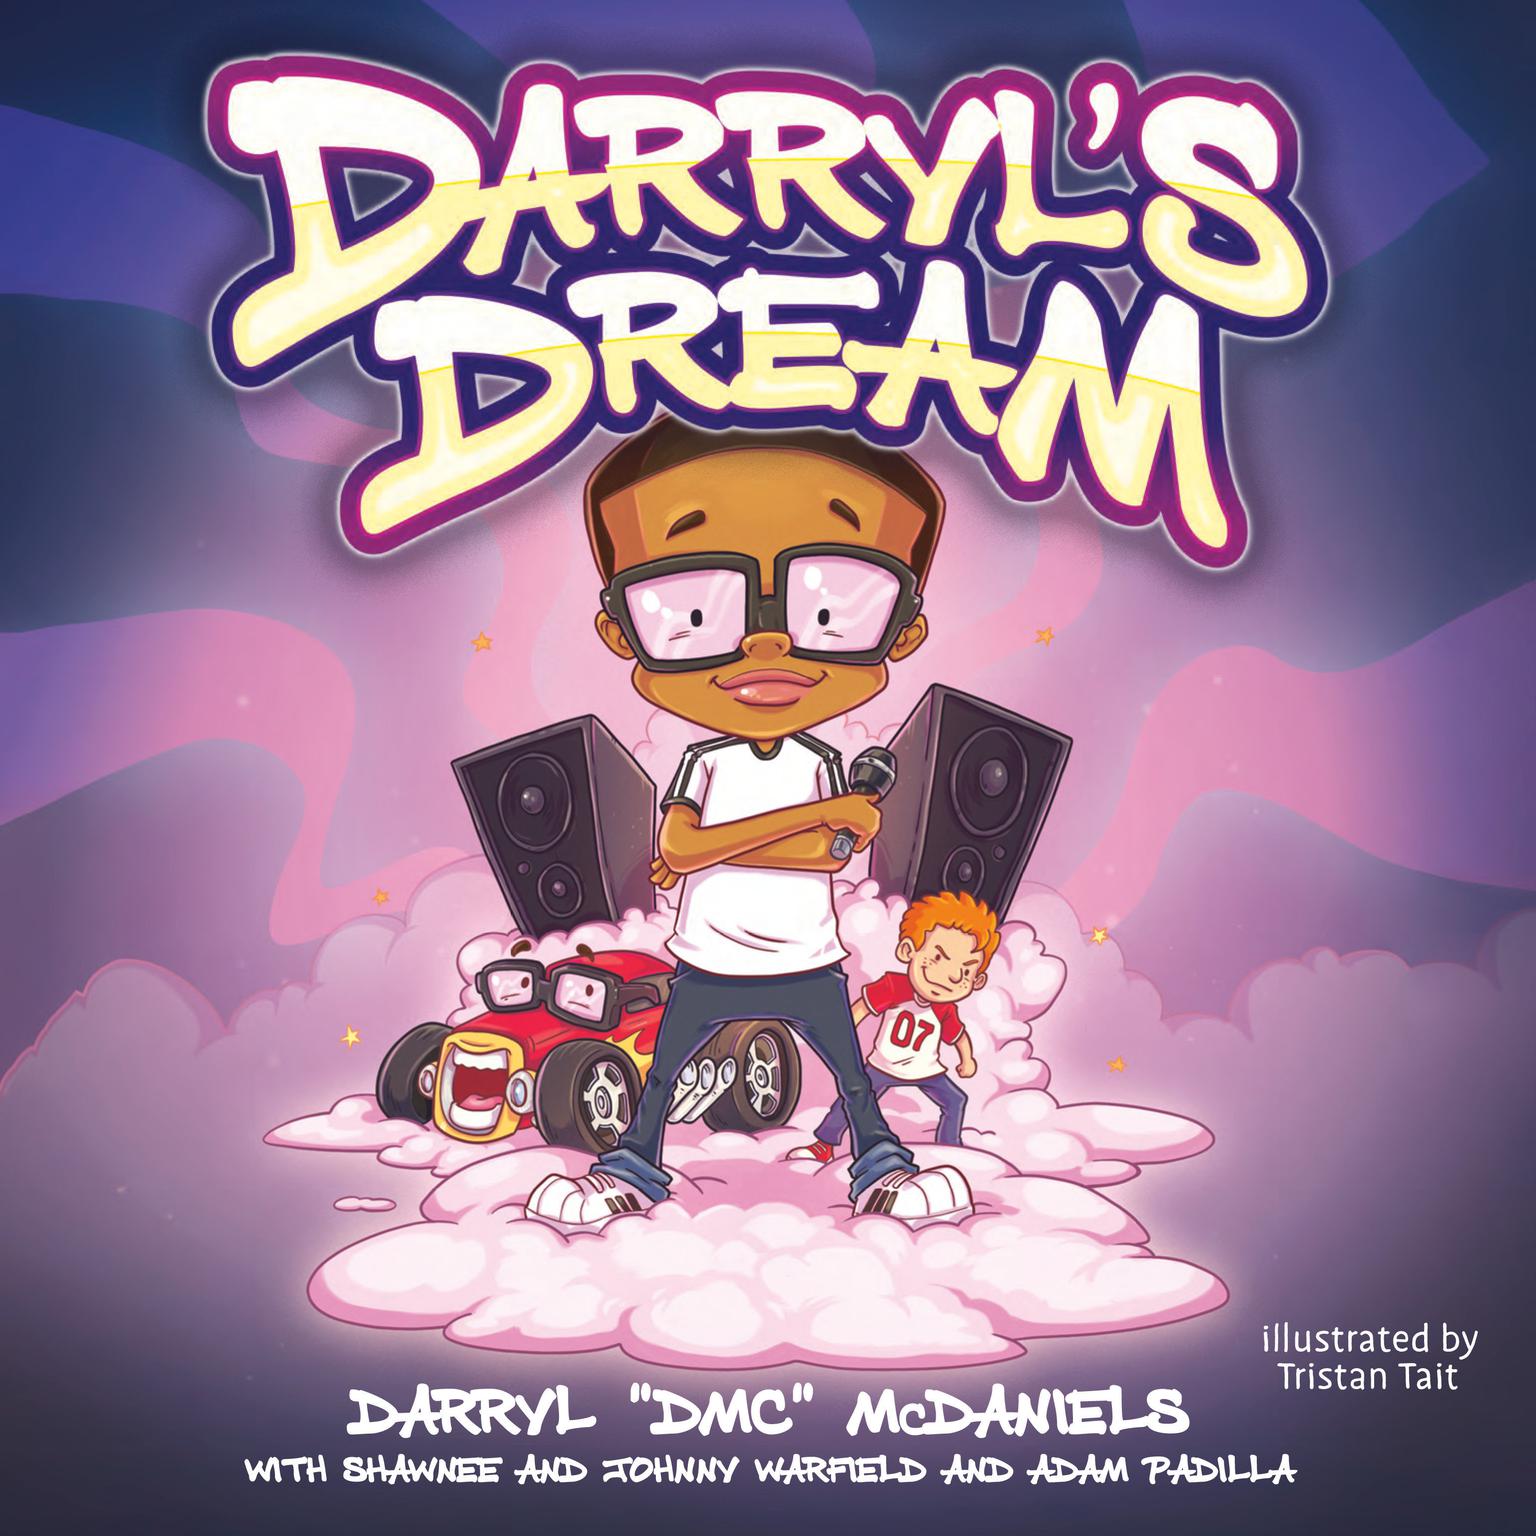 Darryls Dream Audiobook, by Darryl “DMC” McDaniels